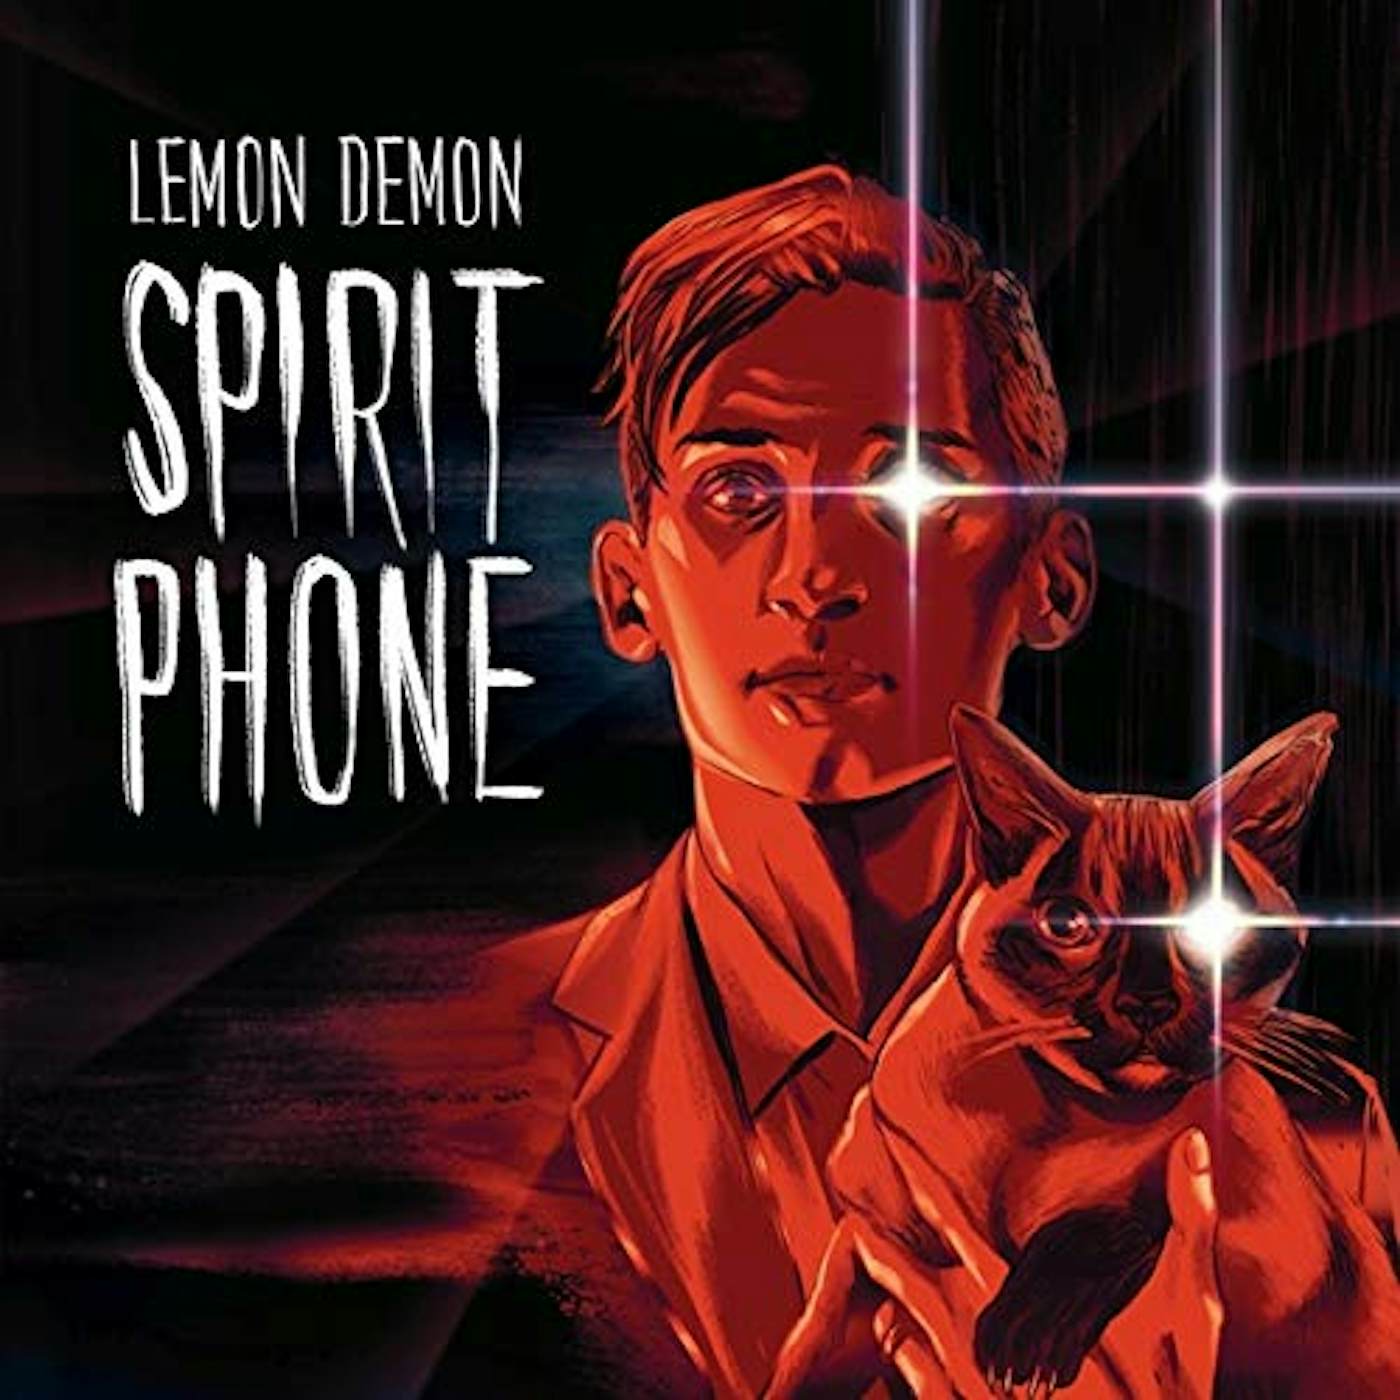 Lemon Demon Spirit Phone Vinyl Record